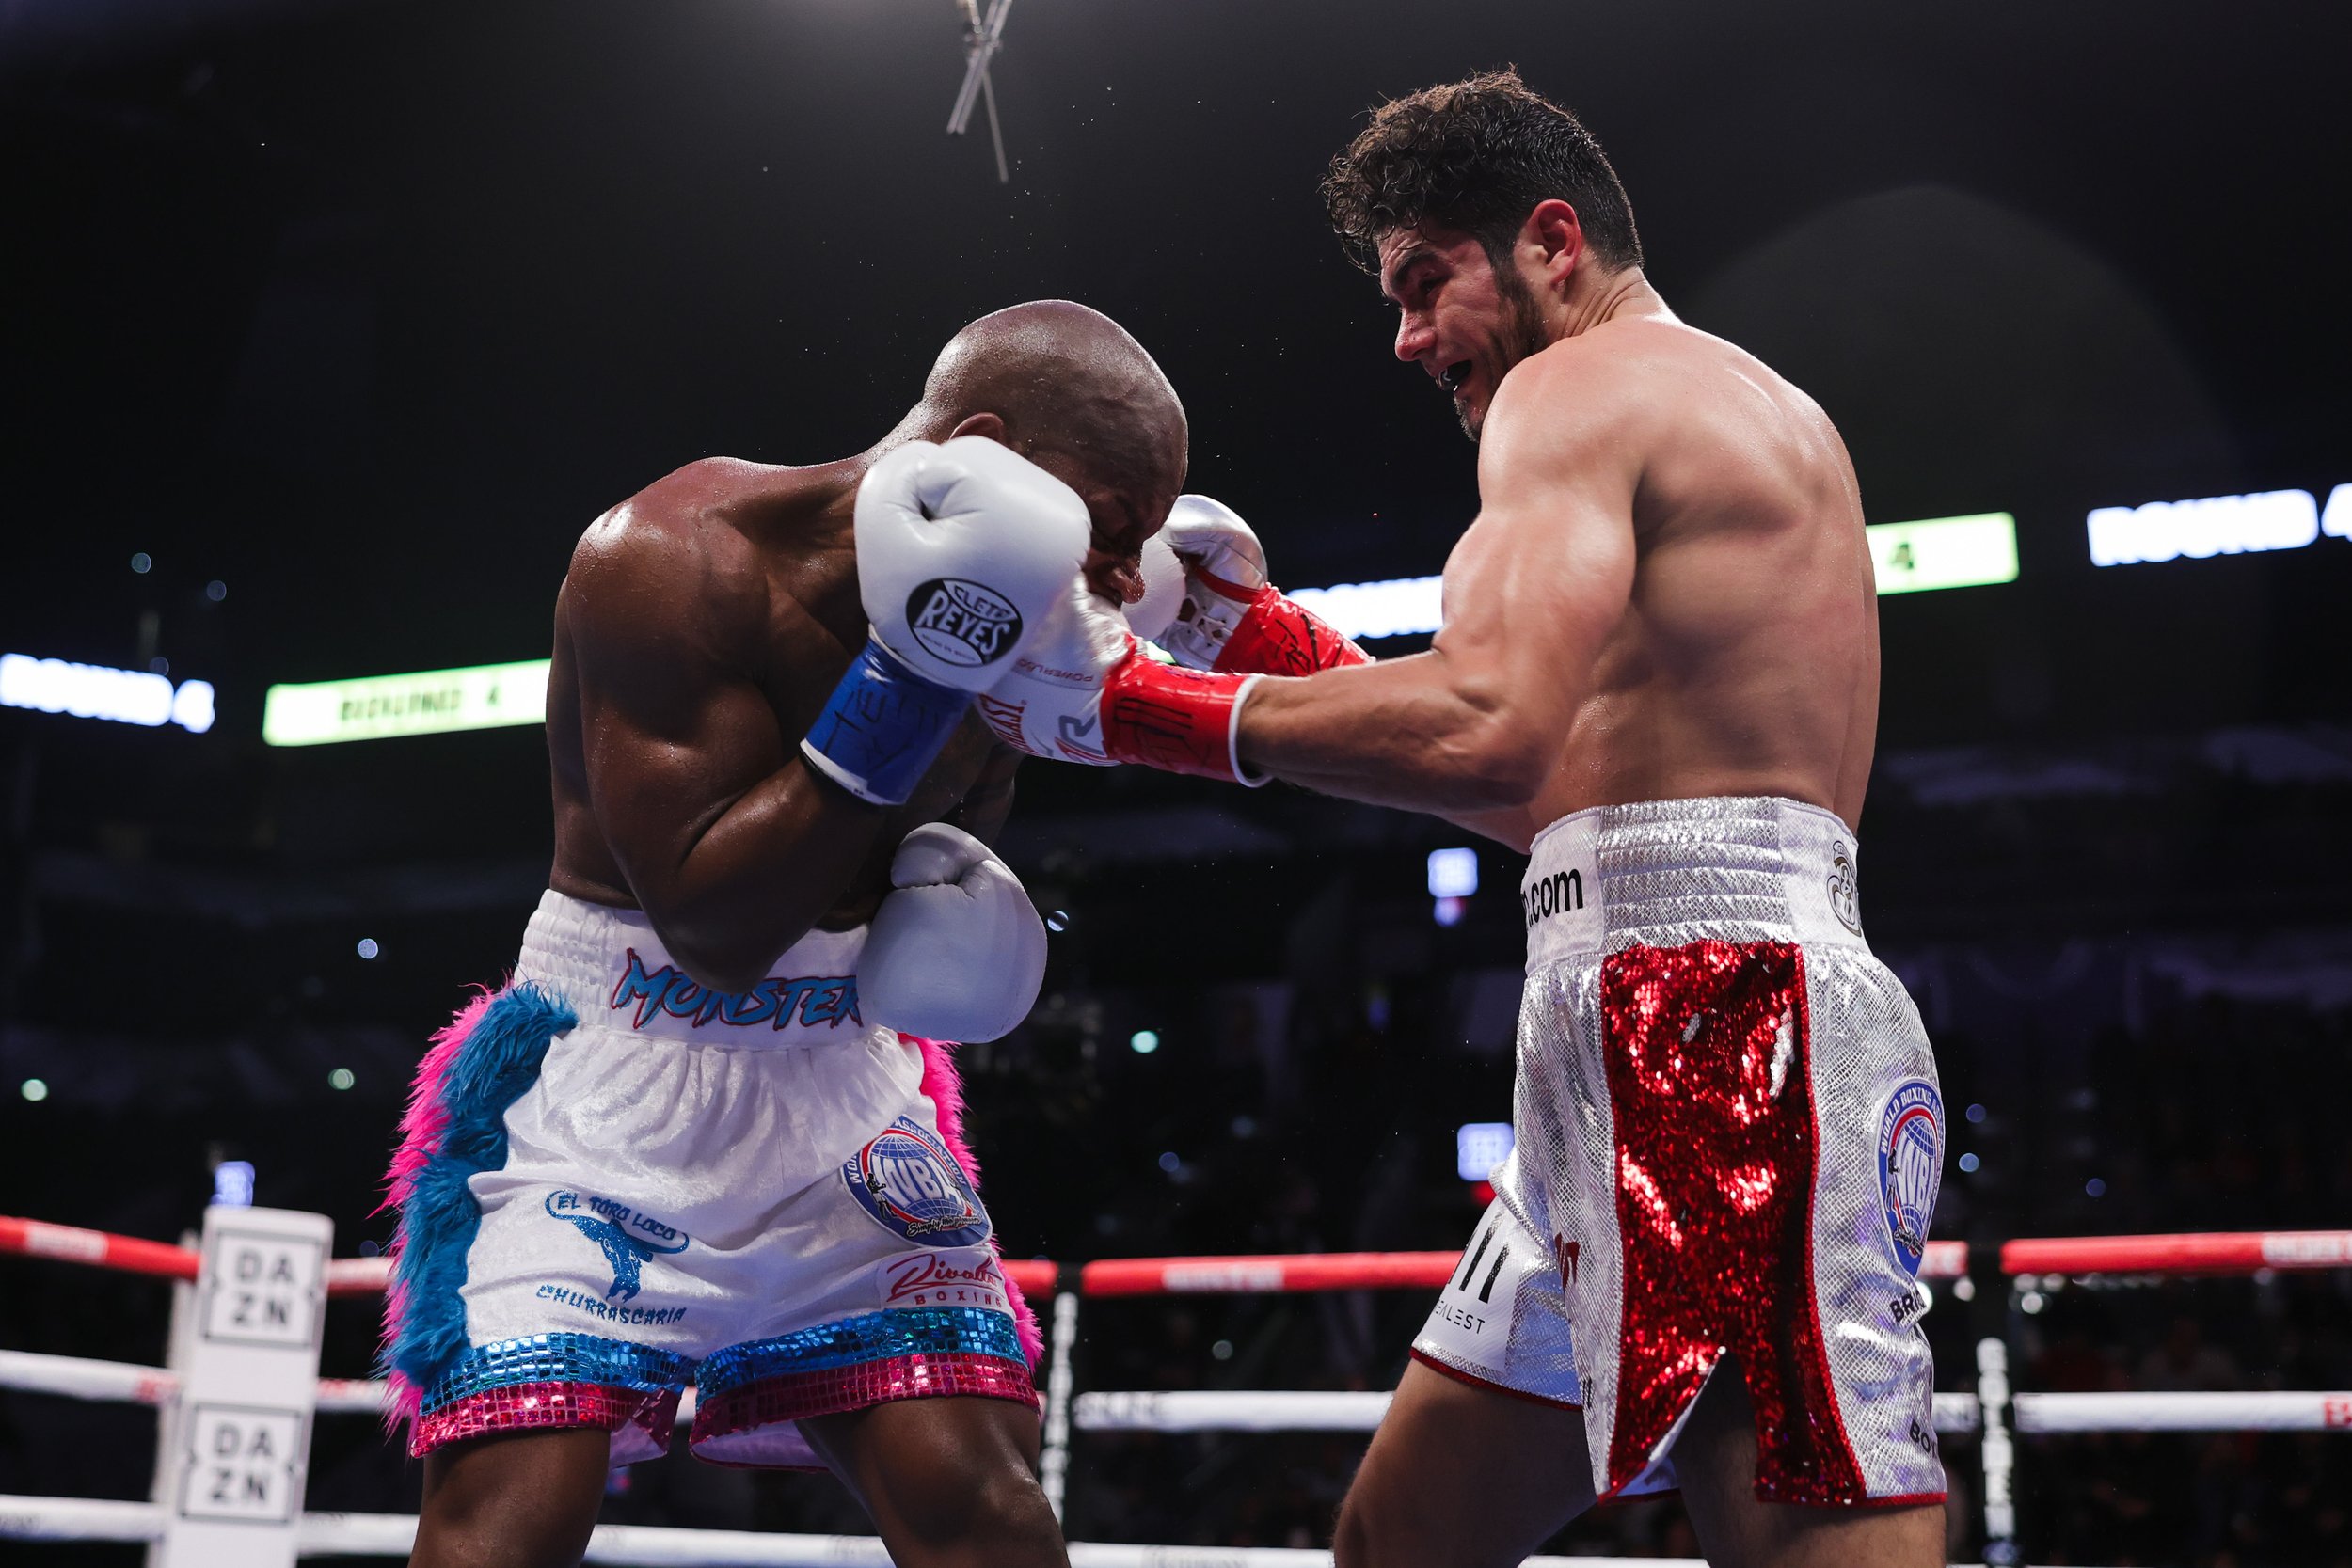 Ramirez vs Gonzalez - Fight Photos by Cris Esqueda2.JPEG